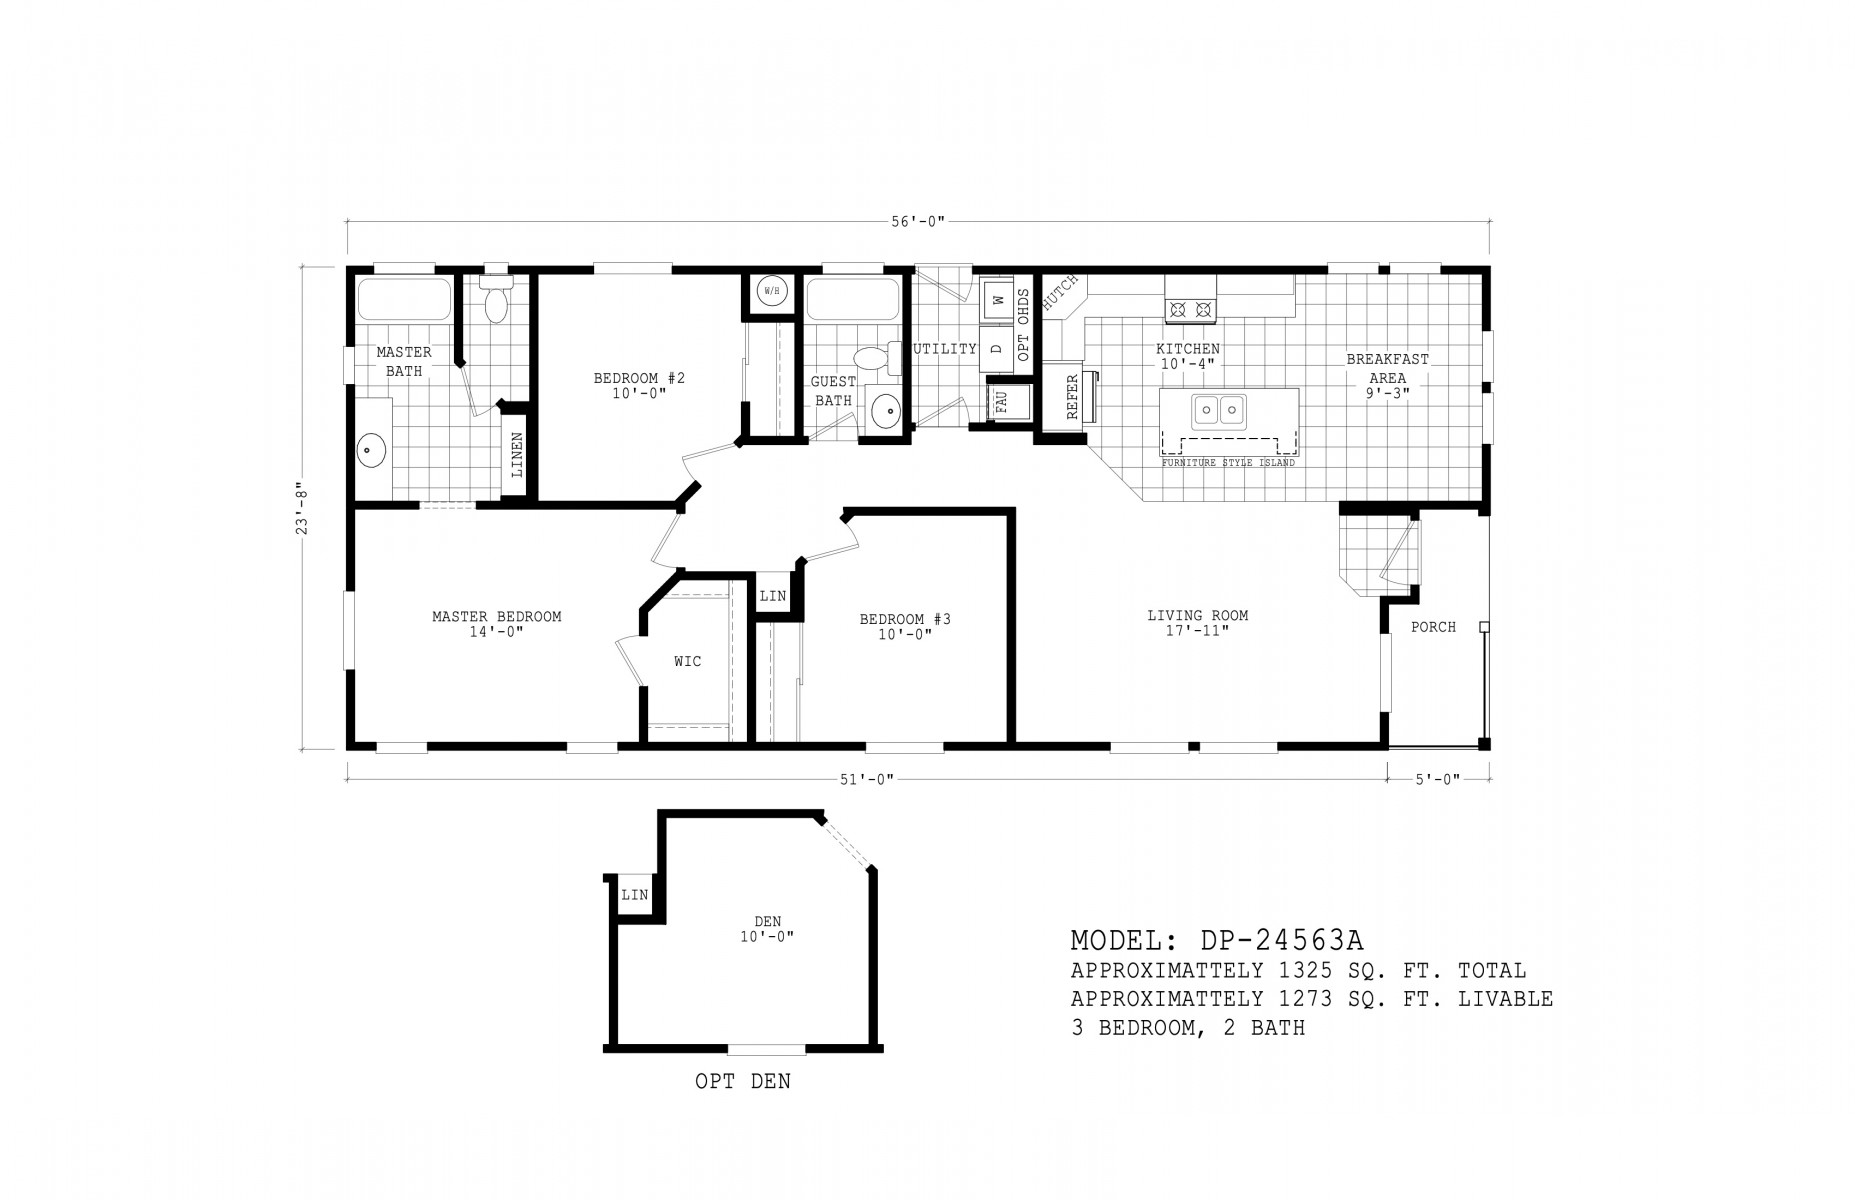 Homes Direct Modular Homes - Model DP24563A - Floorplan